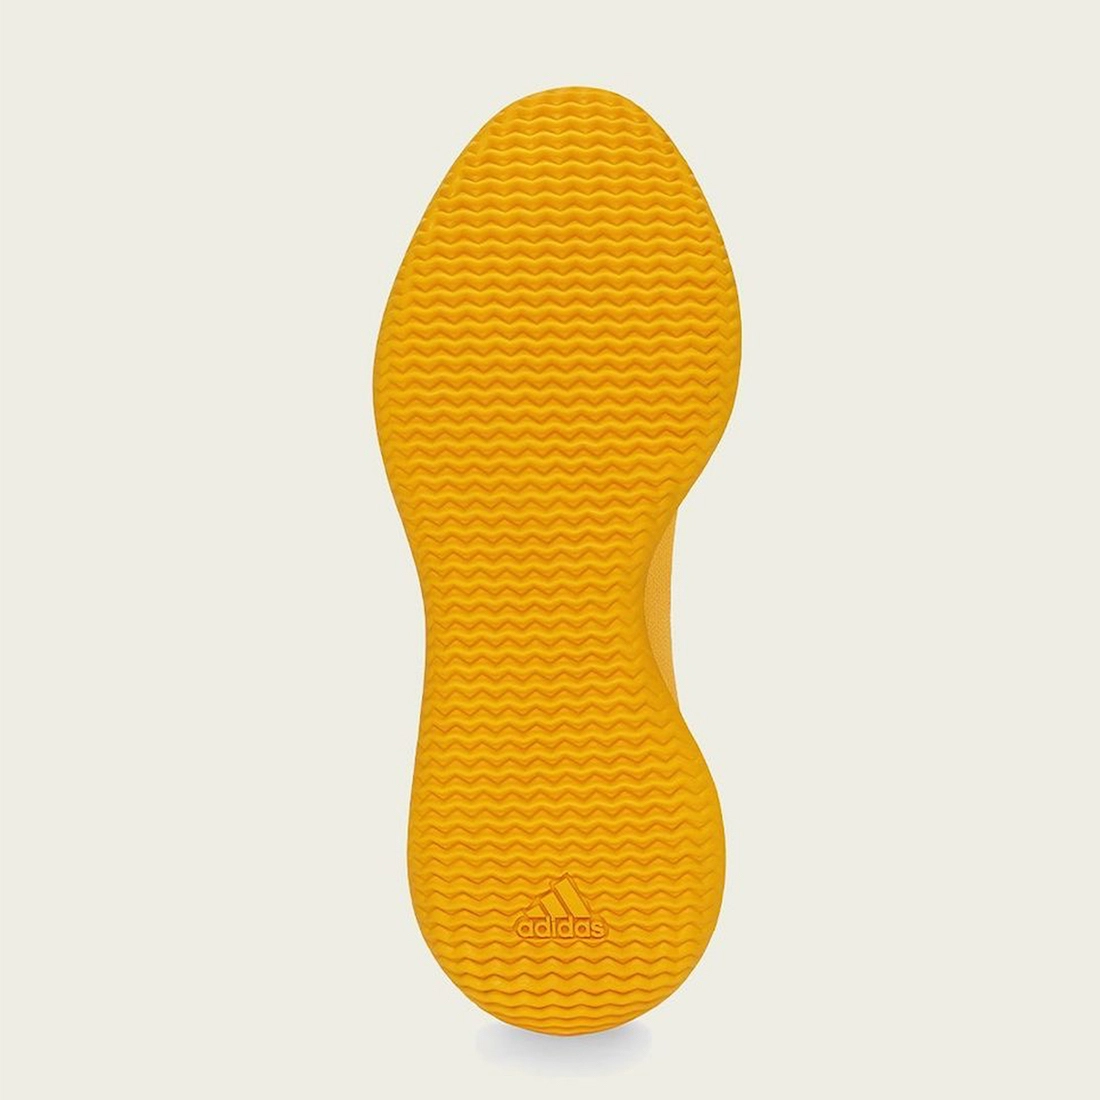 adidas Yeezy Knit Runner Sulfur GW5353 发布日期